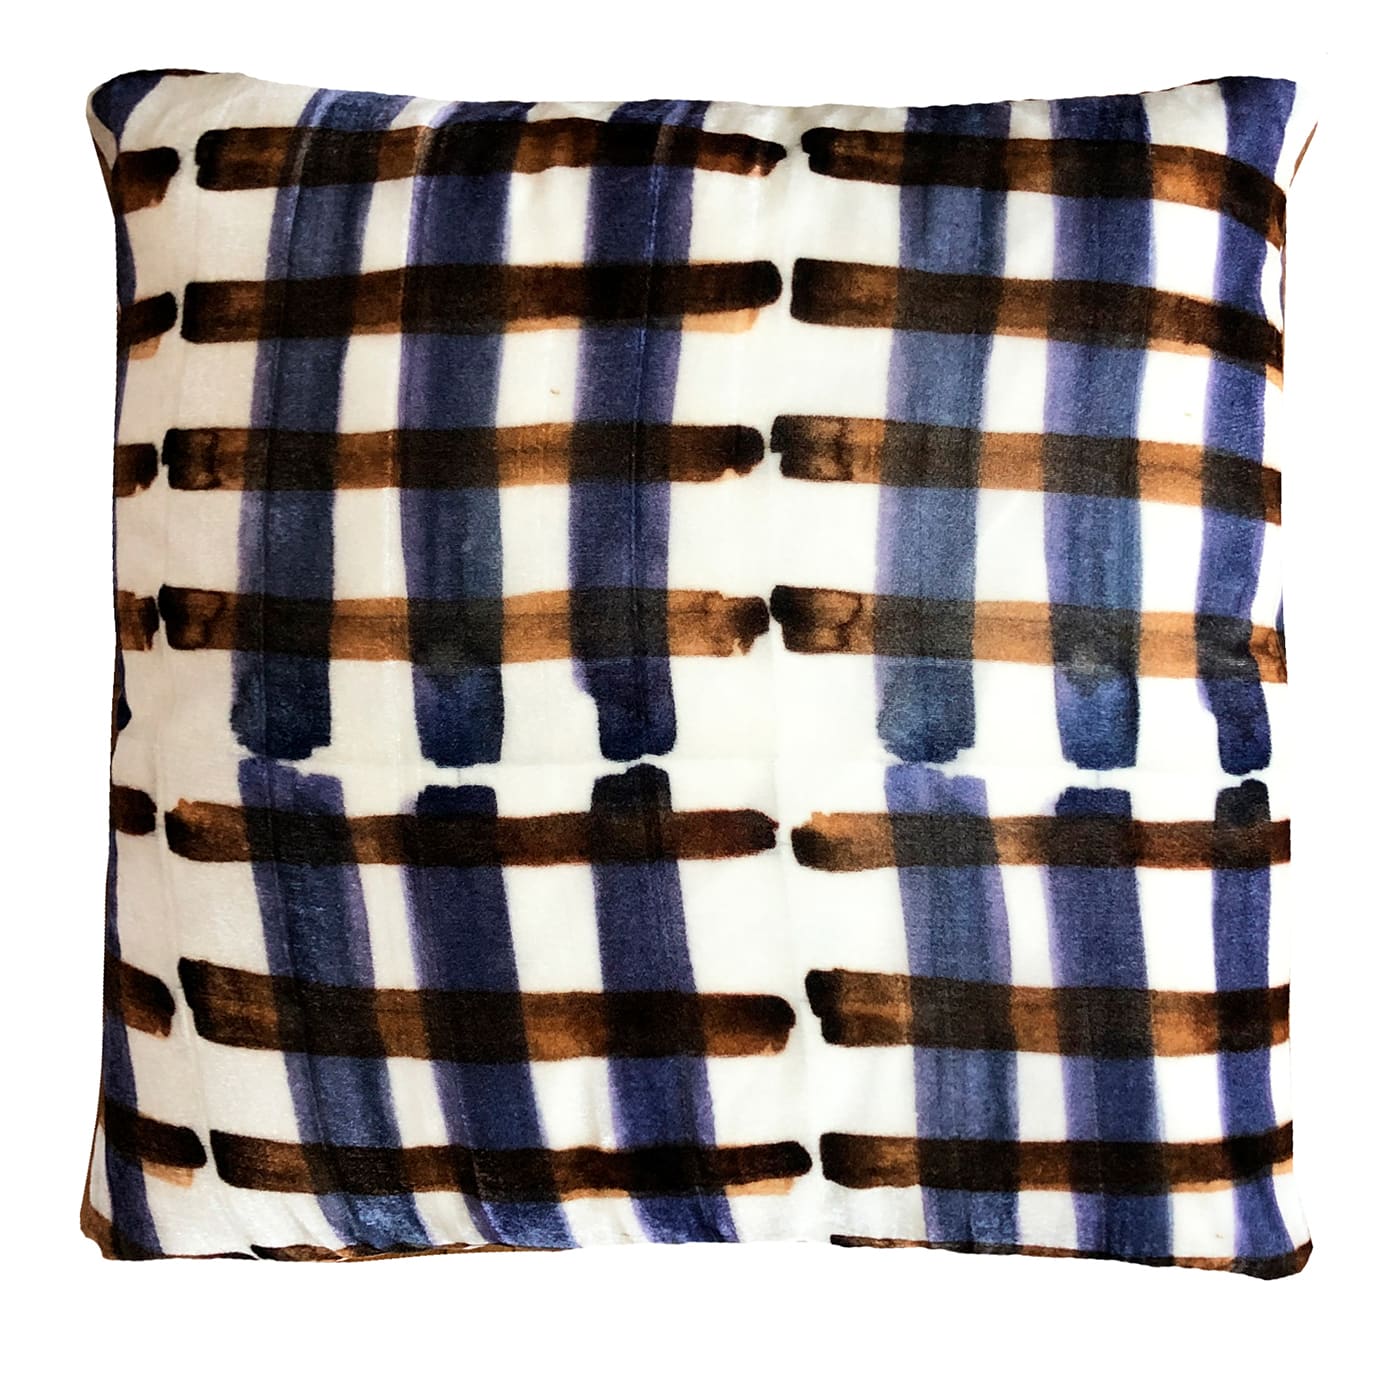 Chocolate and blue velvet cushion cover - Colomba Leddi